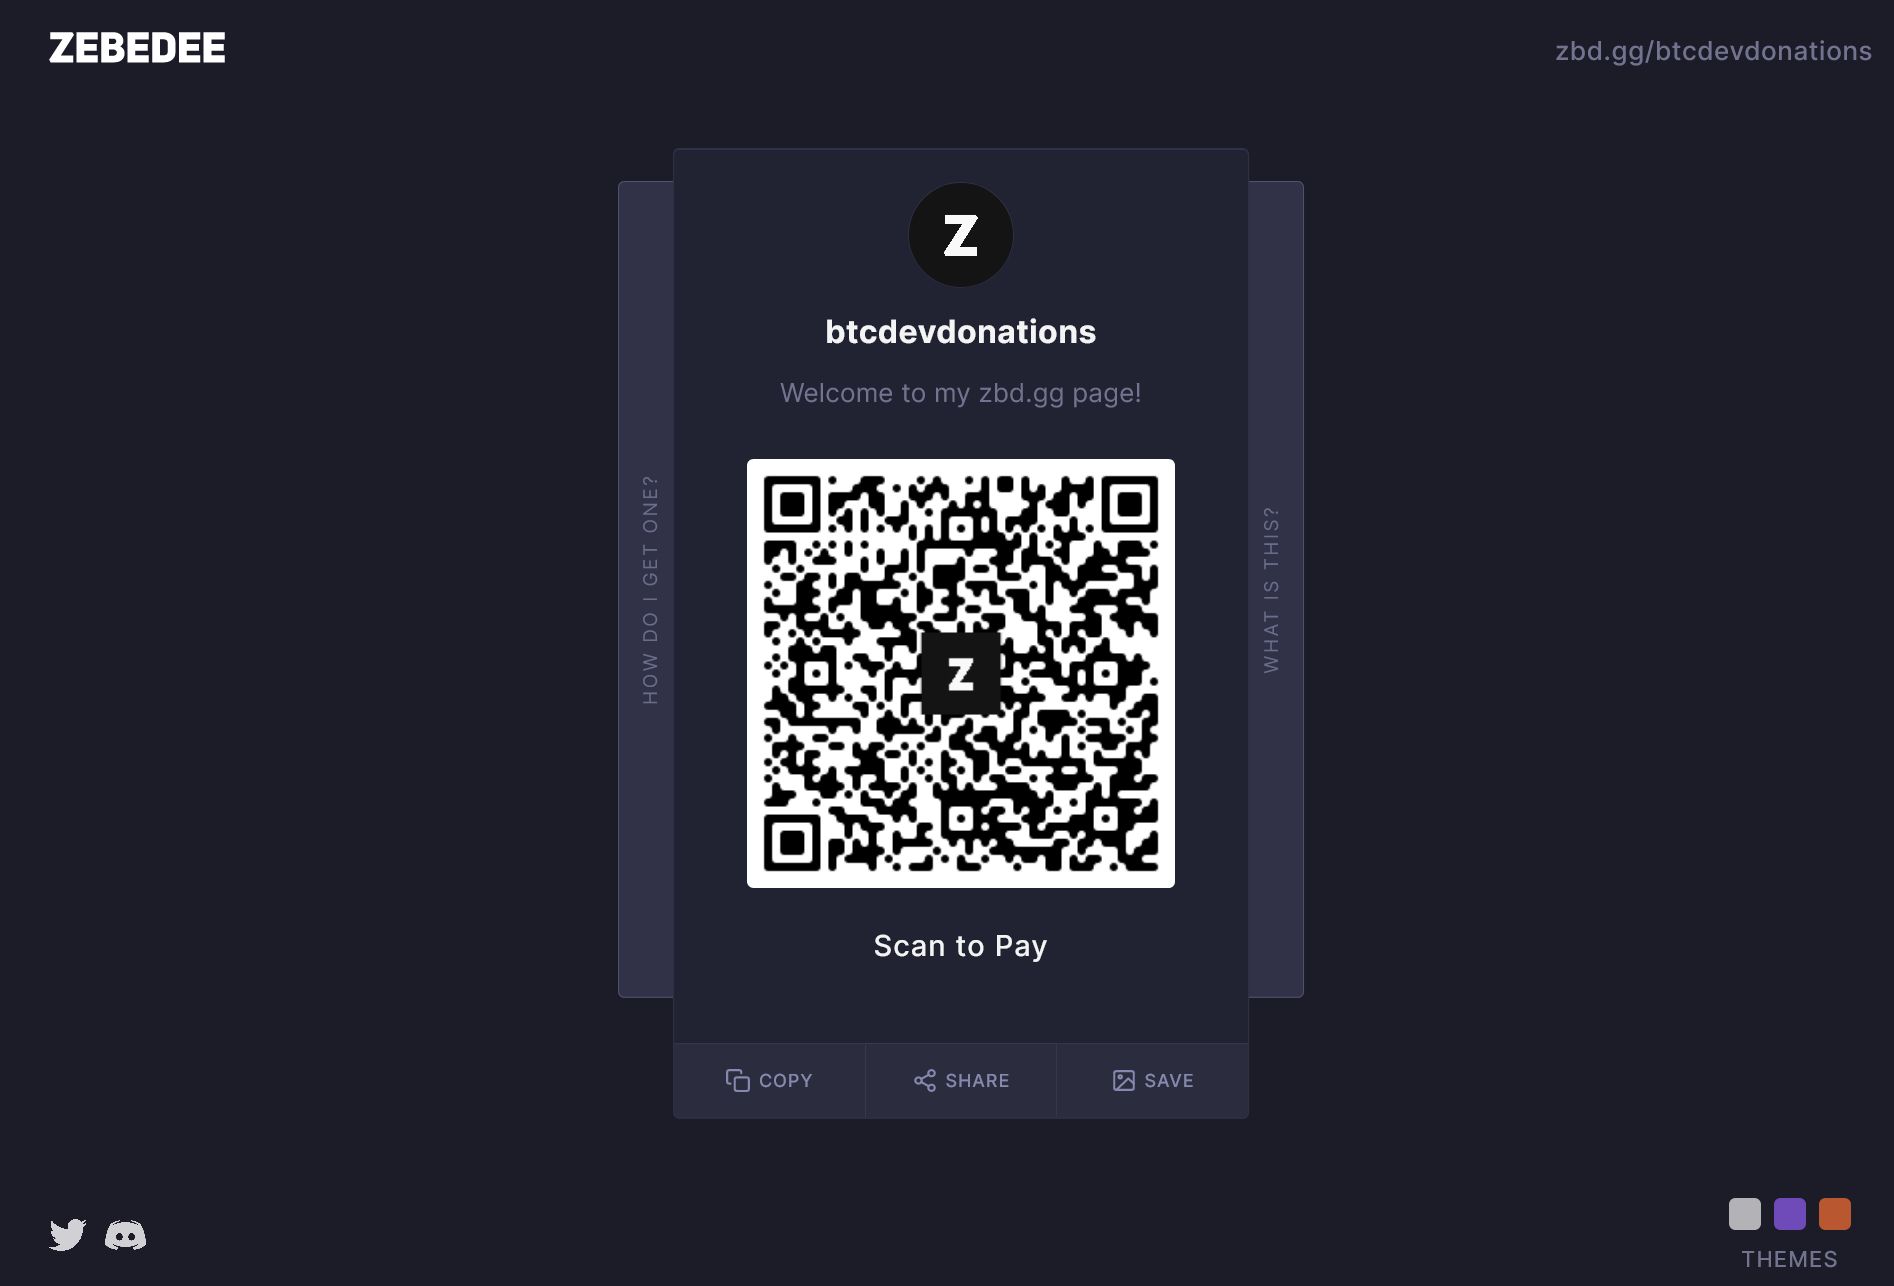 Bitcoin developer donations Gamertag profile page on zbd.gg